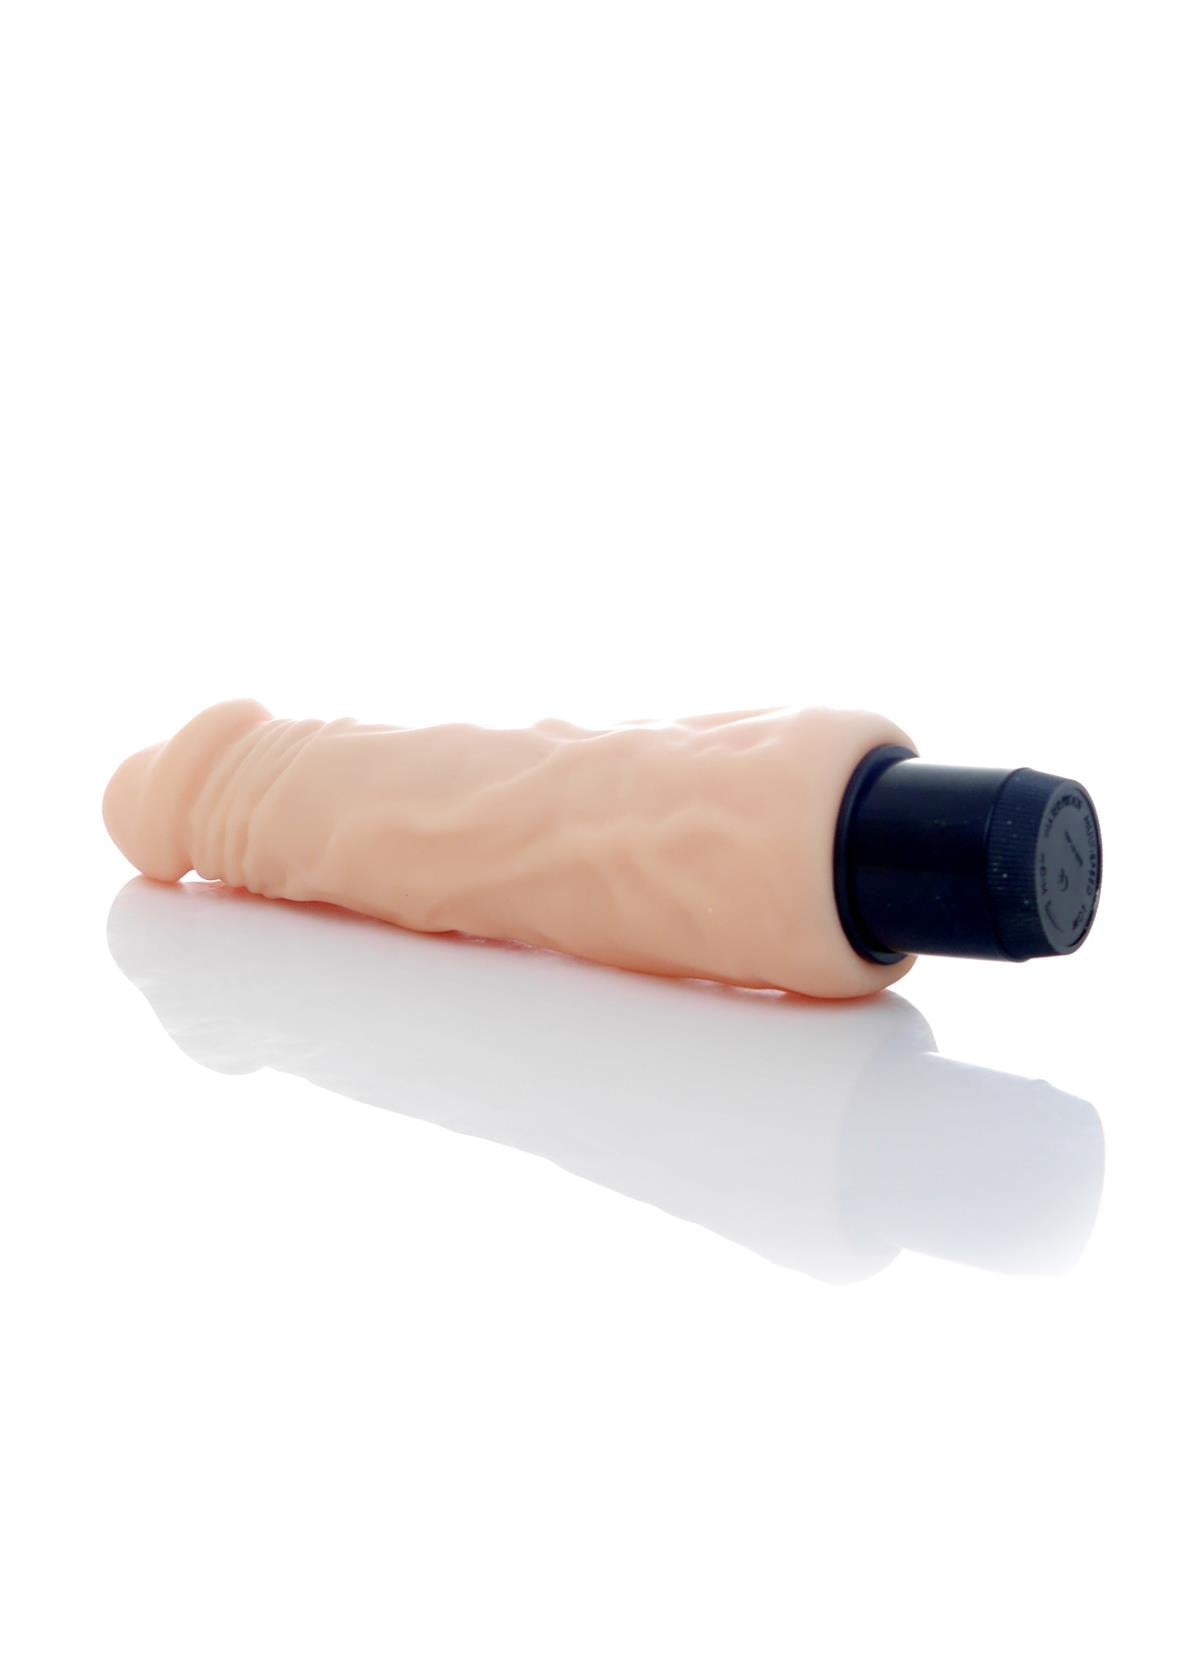 Bossoftoys Flurry Realistic vibrator - Cyber leather - Extra ordinary Flexible Material - Flesh - 20,3 cm - 44-00006